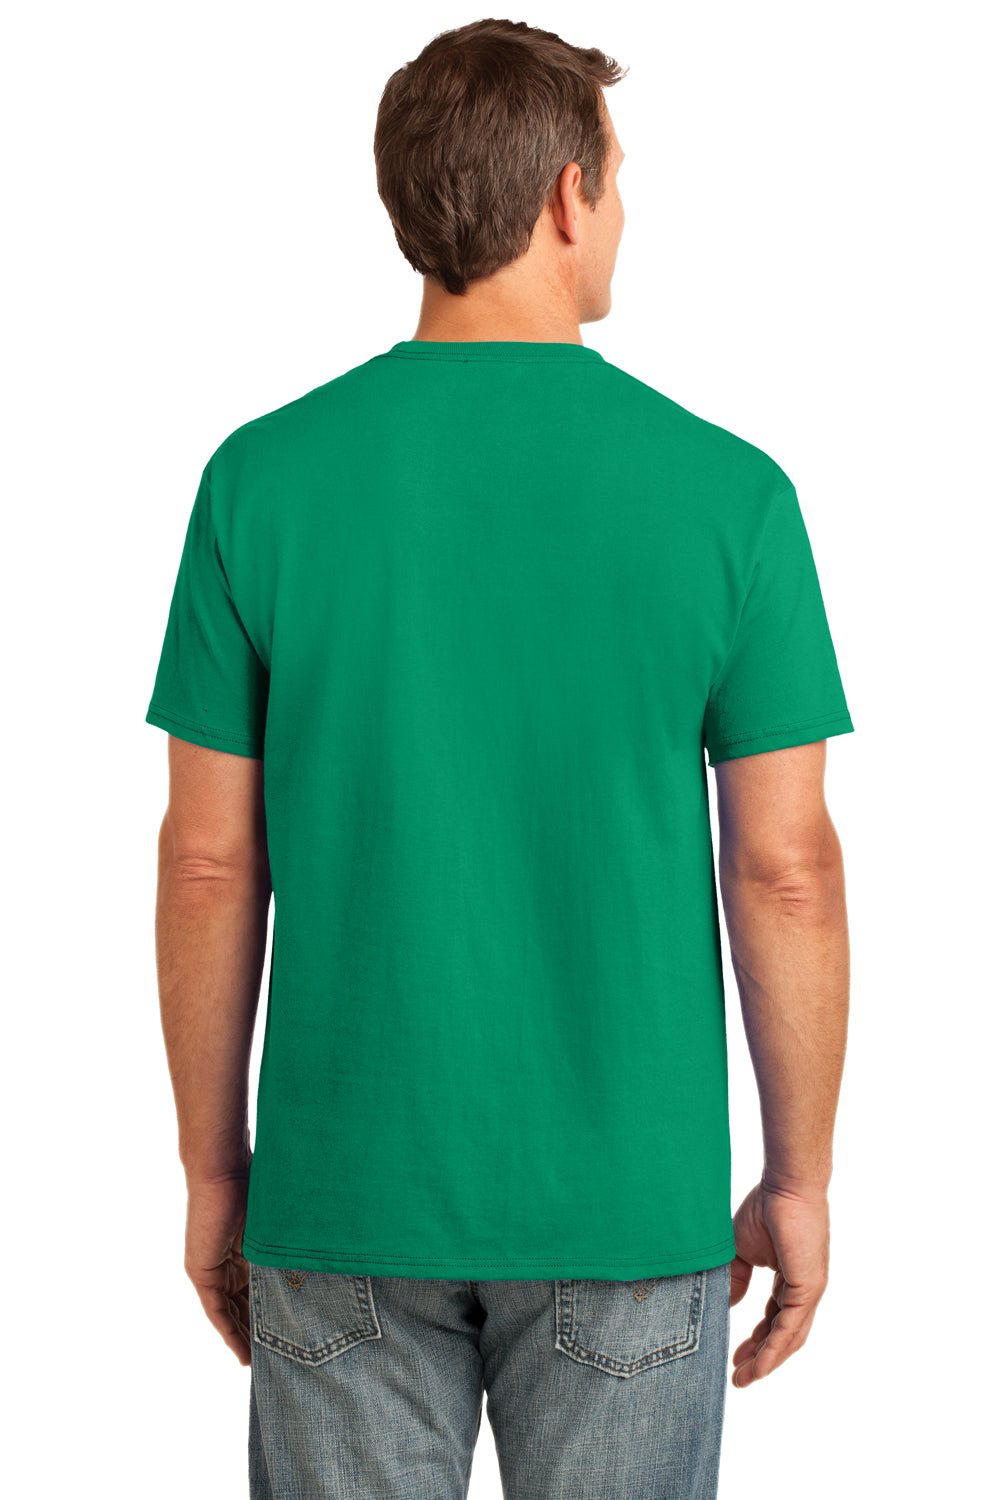 Port & Company PC54P Mens Core Short Sleeve Crewneck T-Shirt w/ Pocket Kelly Green Back